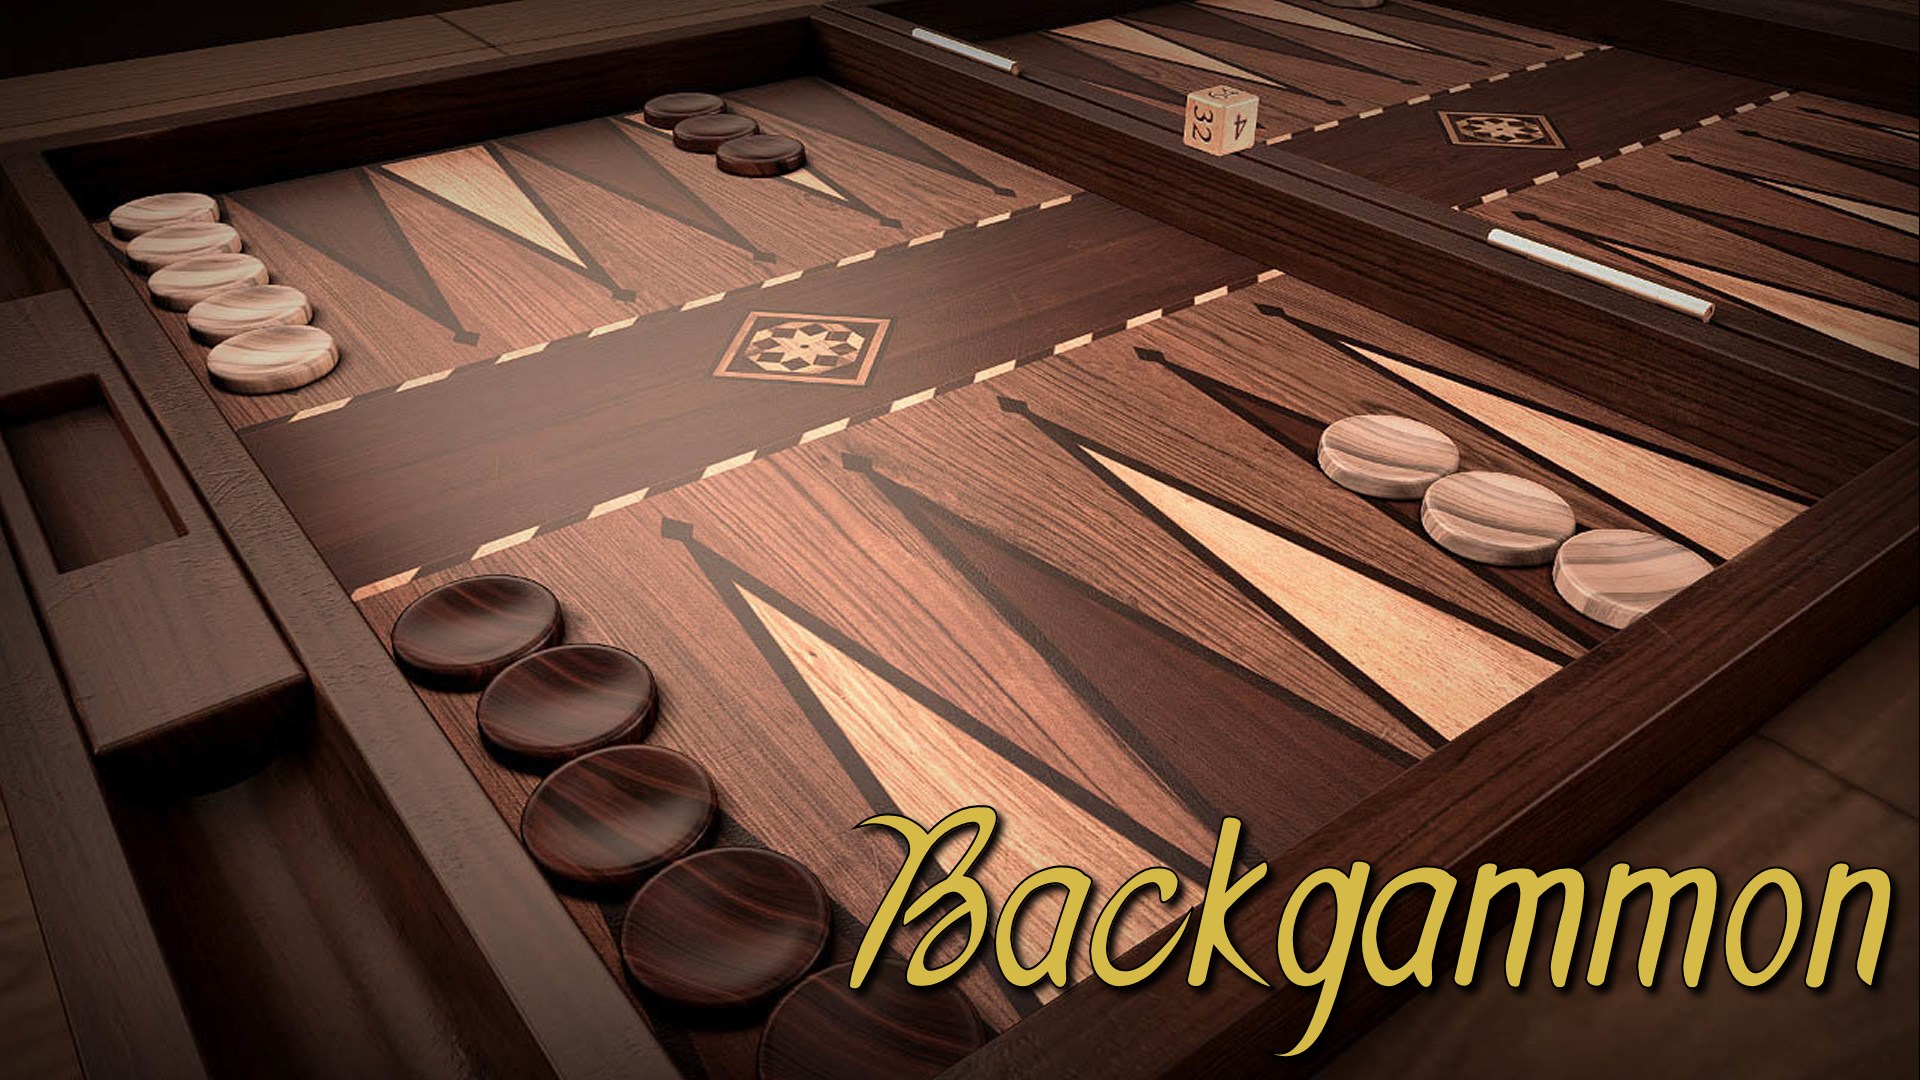 microsoft online backgammon